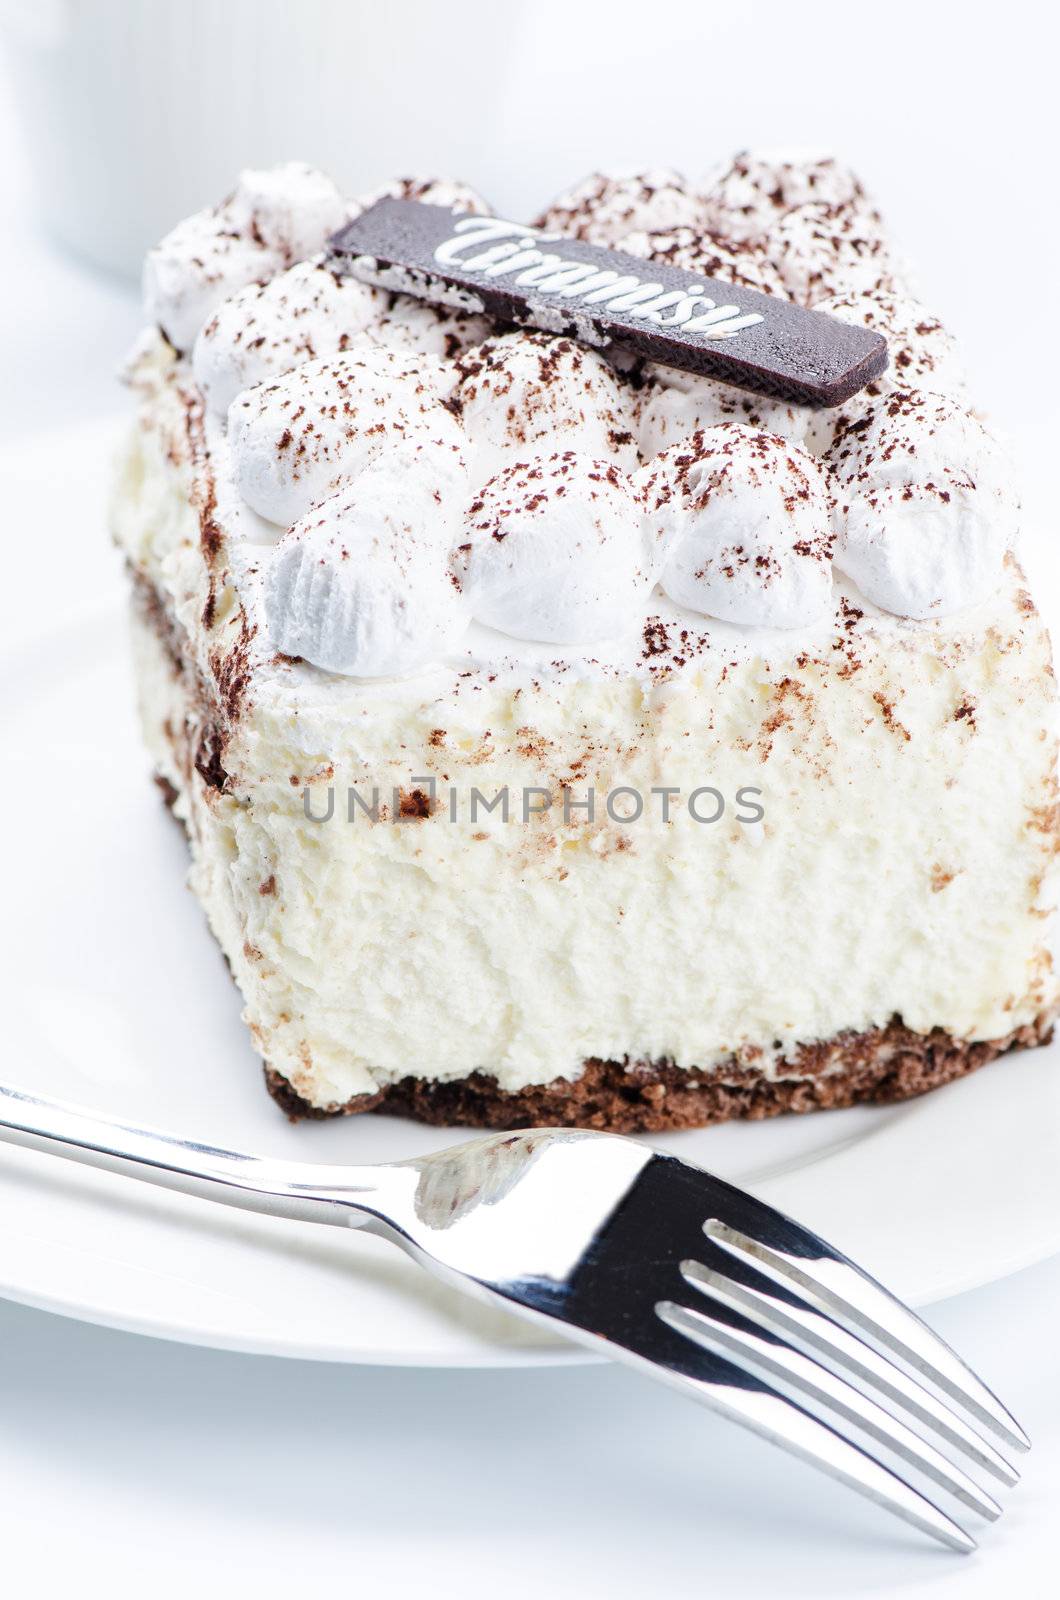 Tiramisu cake on white saucer